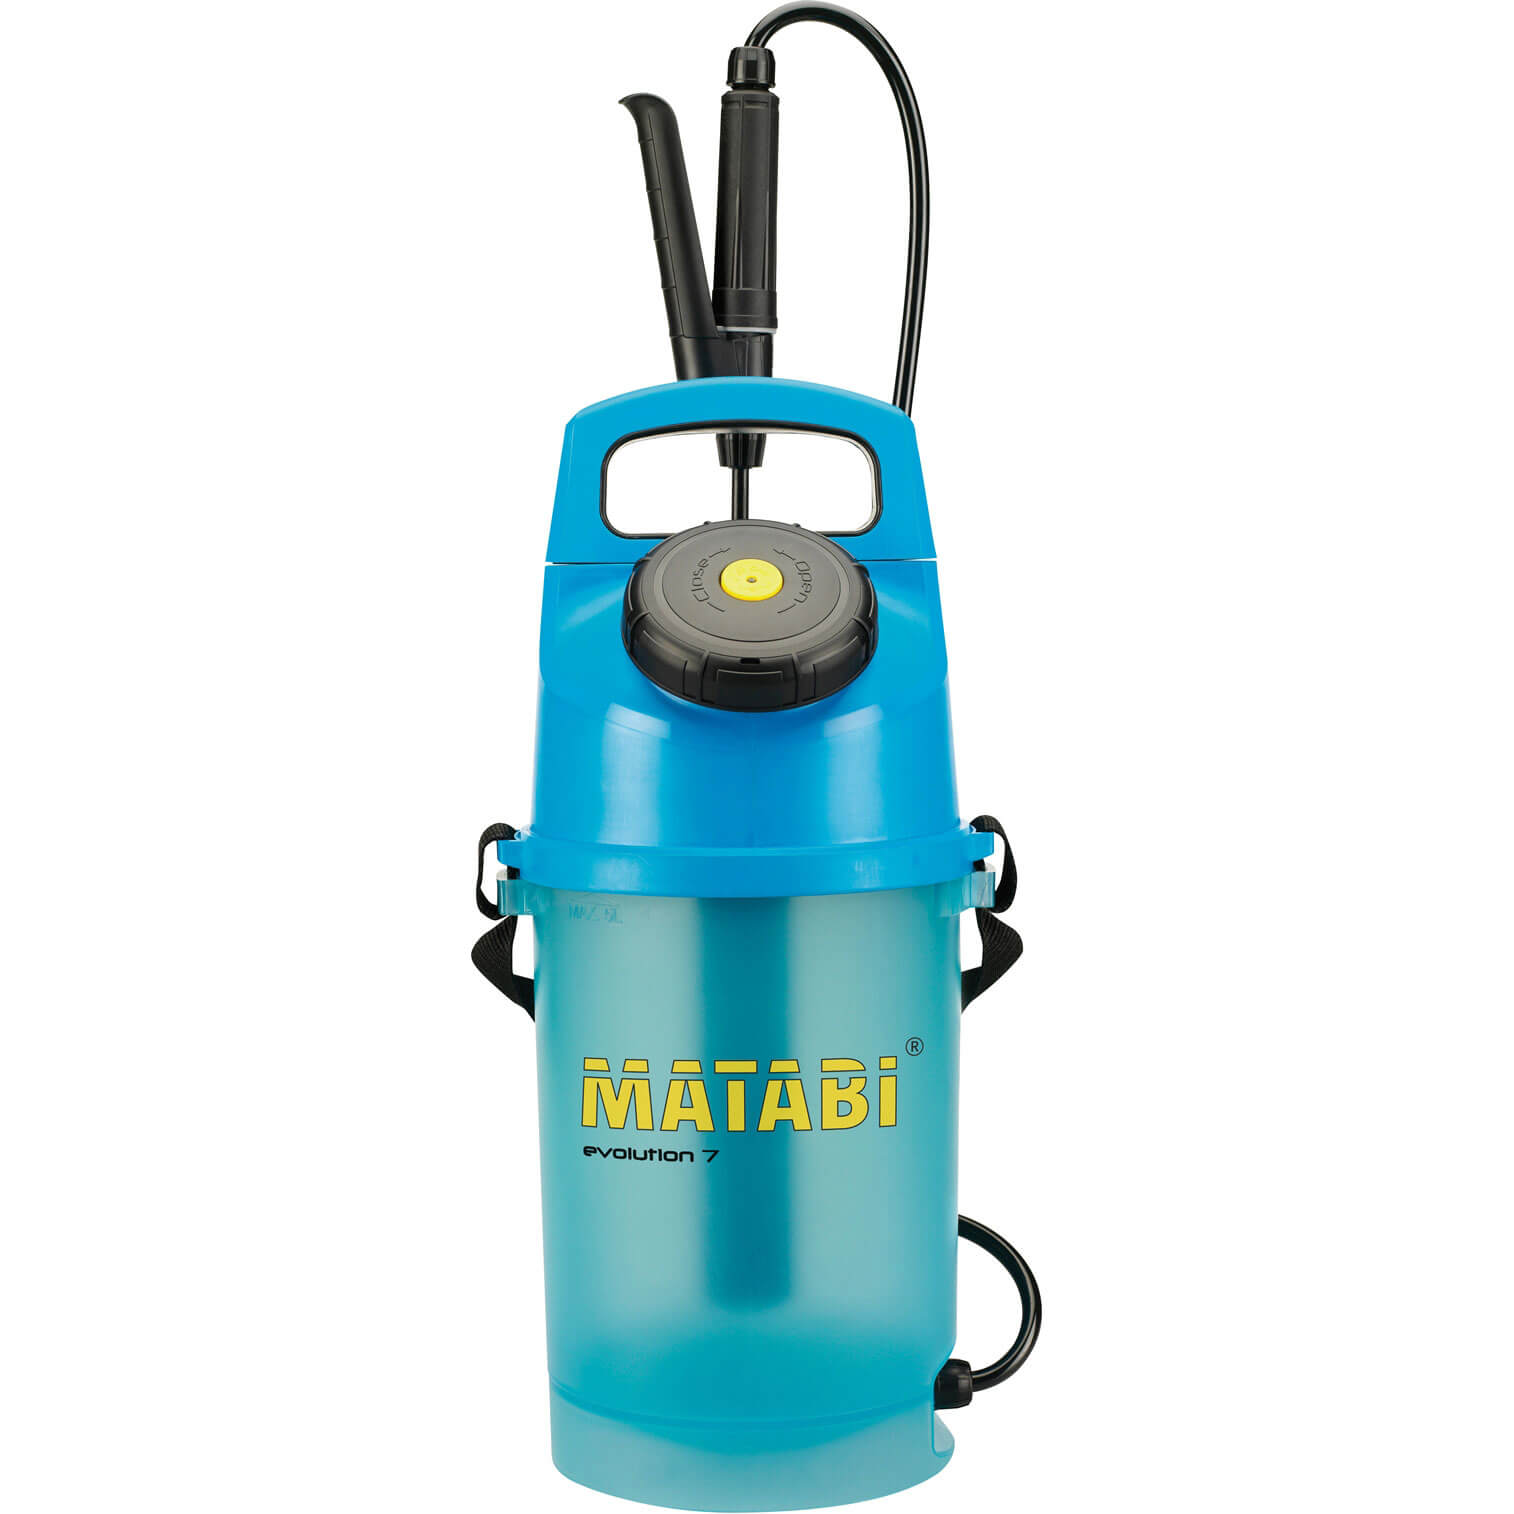 Image of Matabi Evolution 7 Water Pressure Sprayer 7l